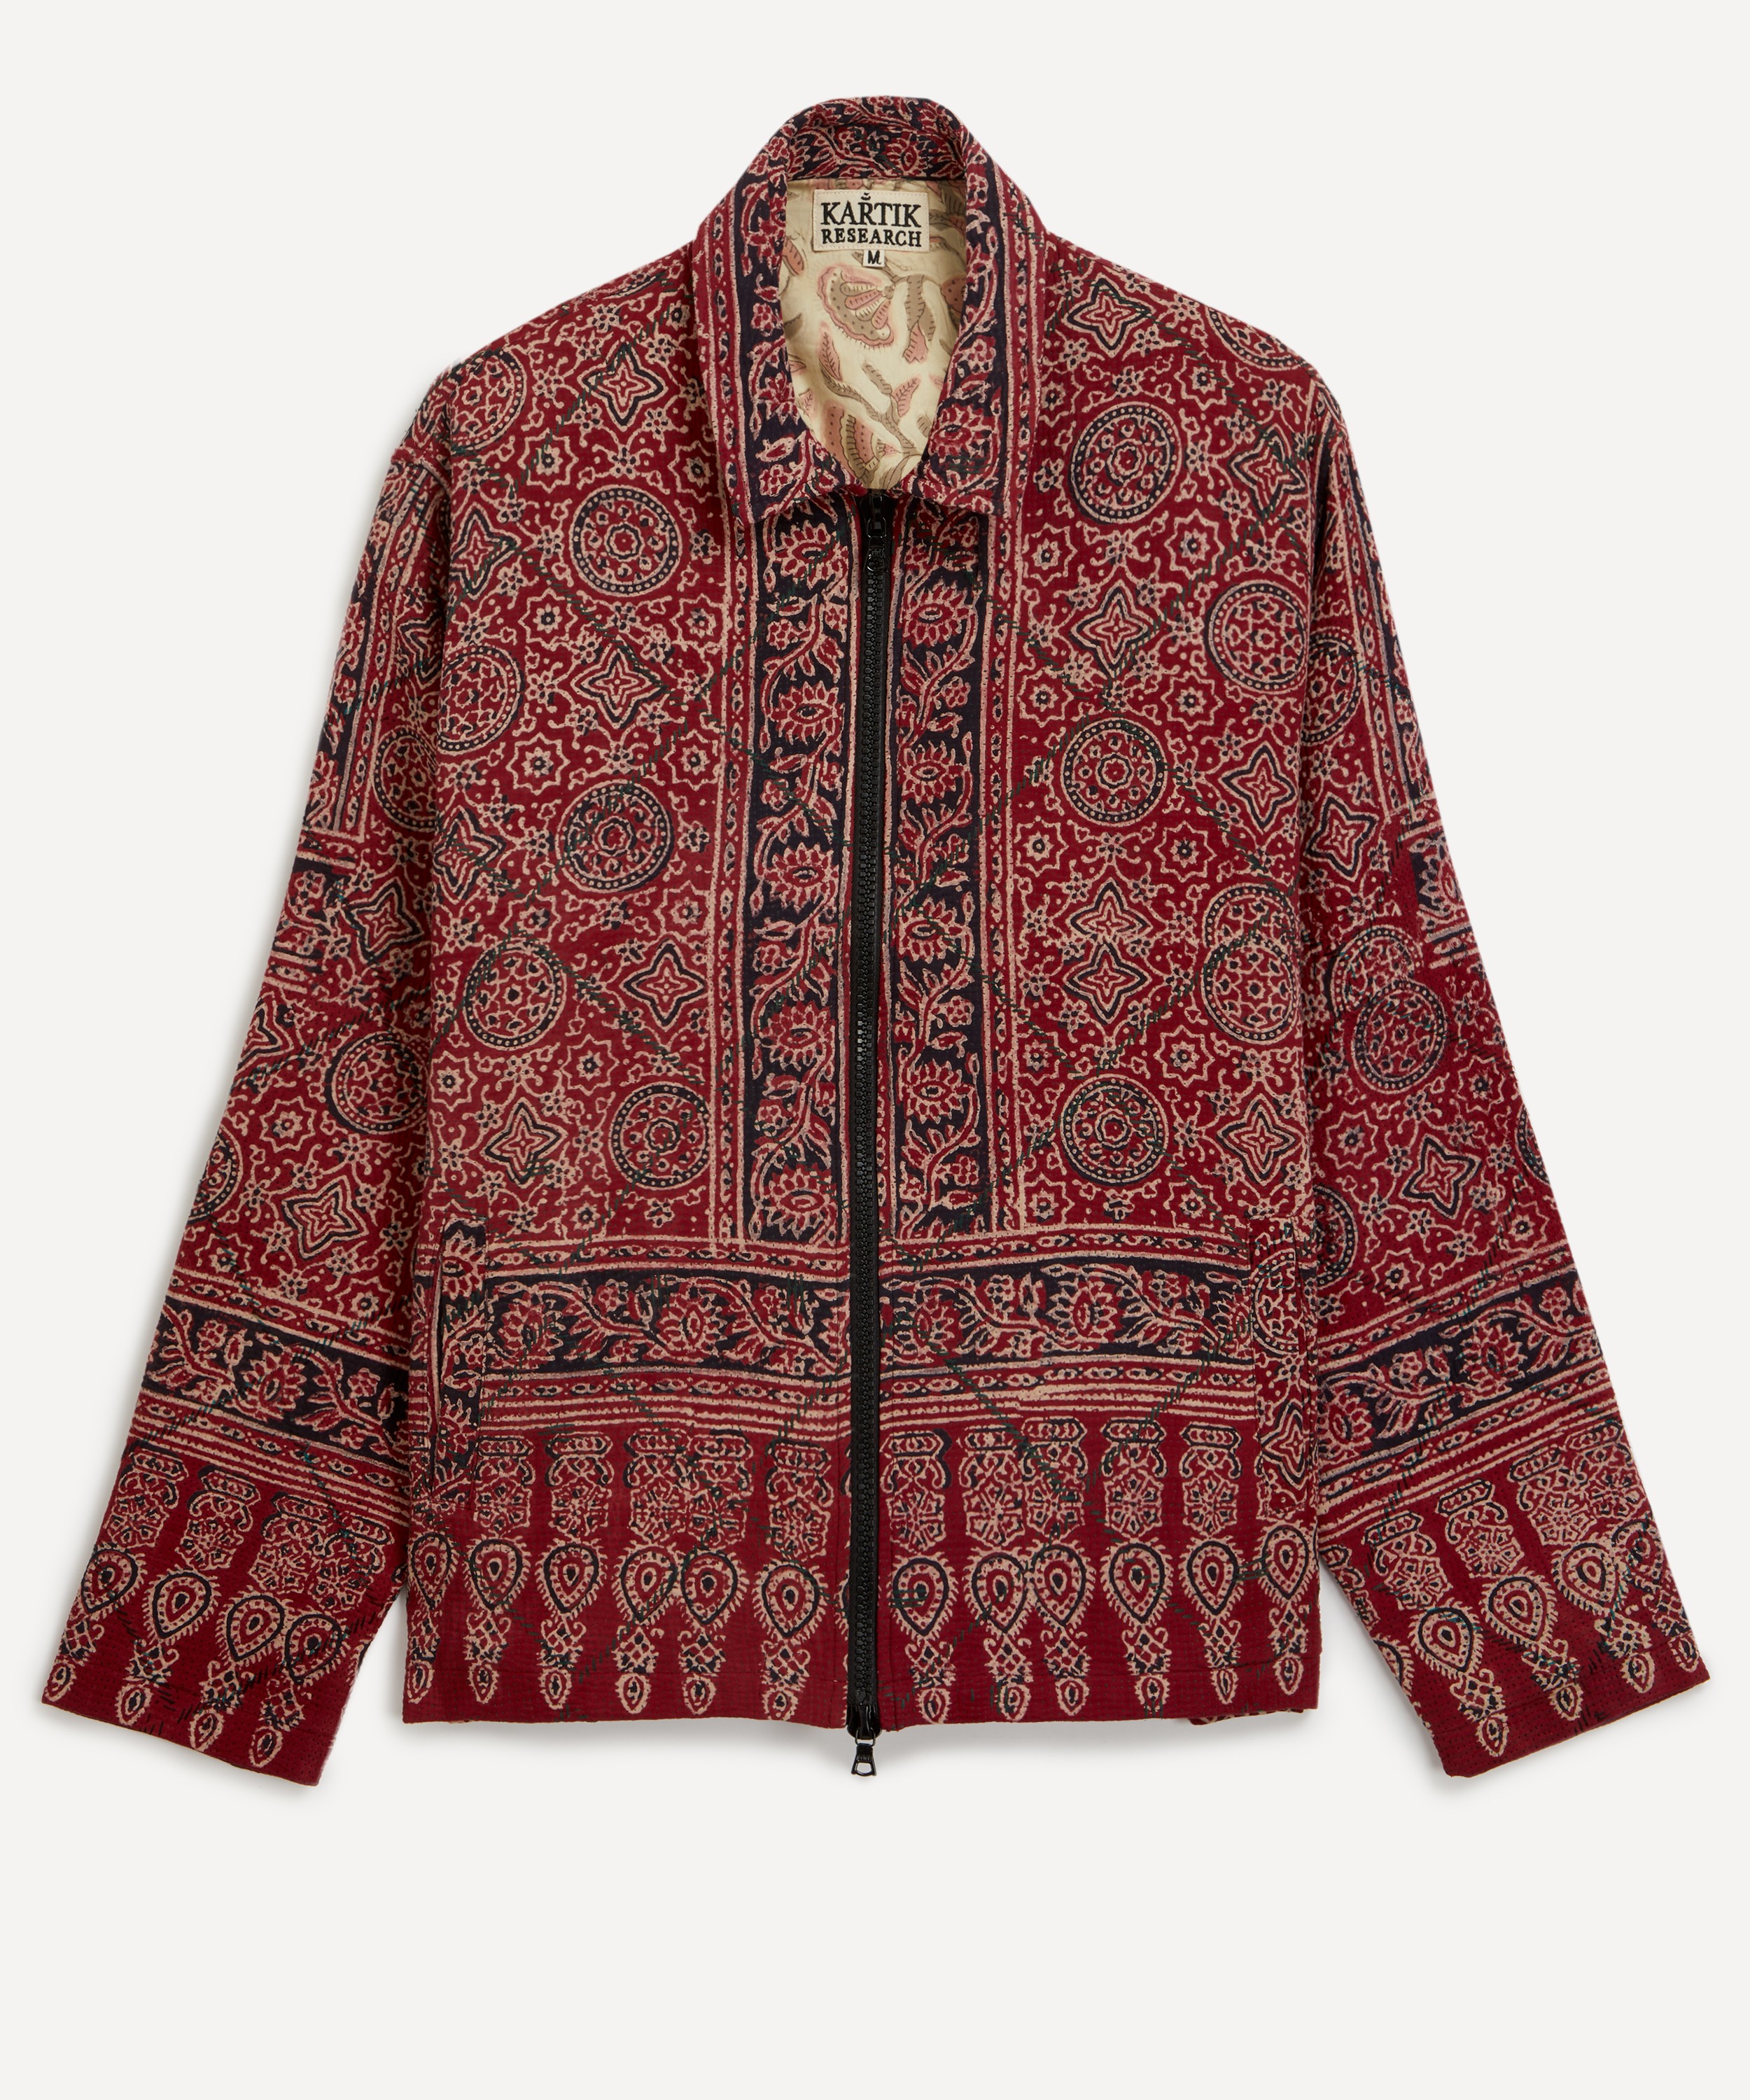 Kartik Research - Kantha Embroidered Paisley Jacket